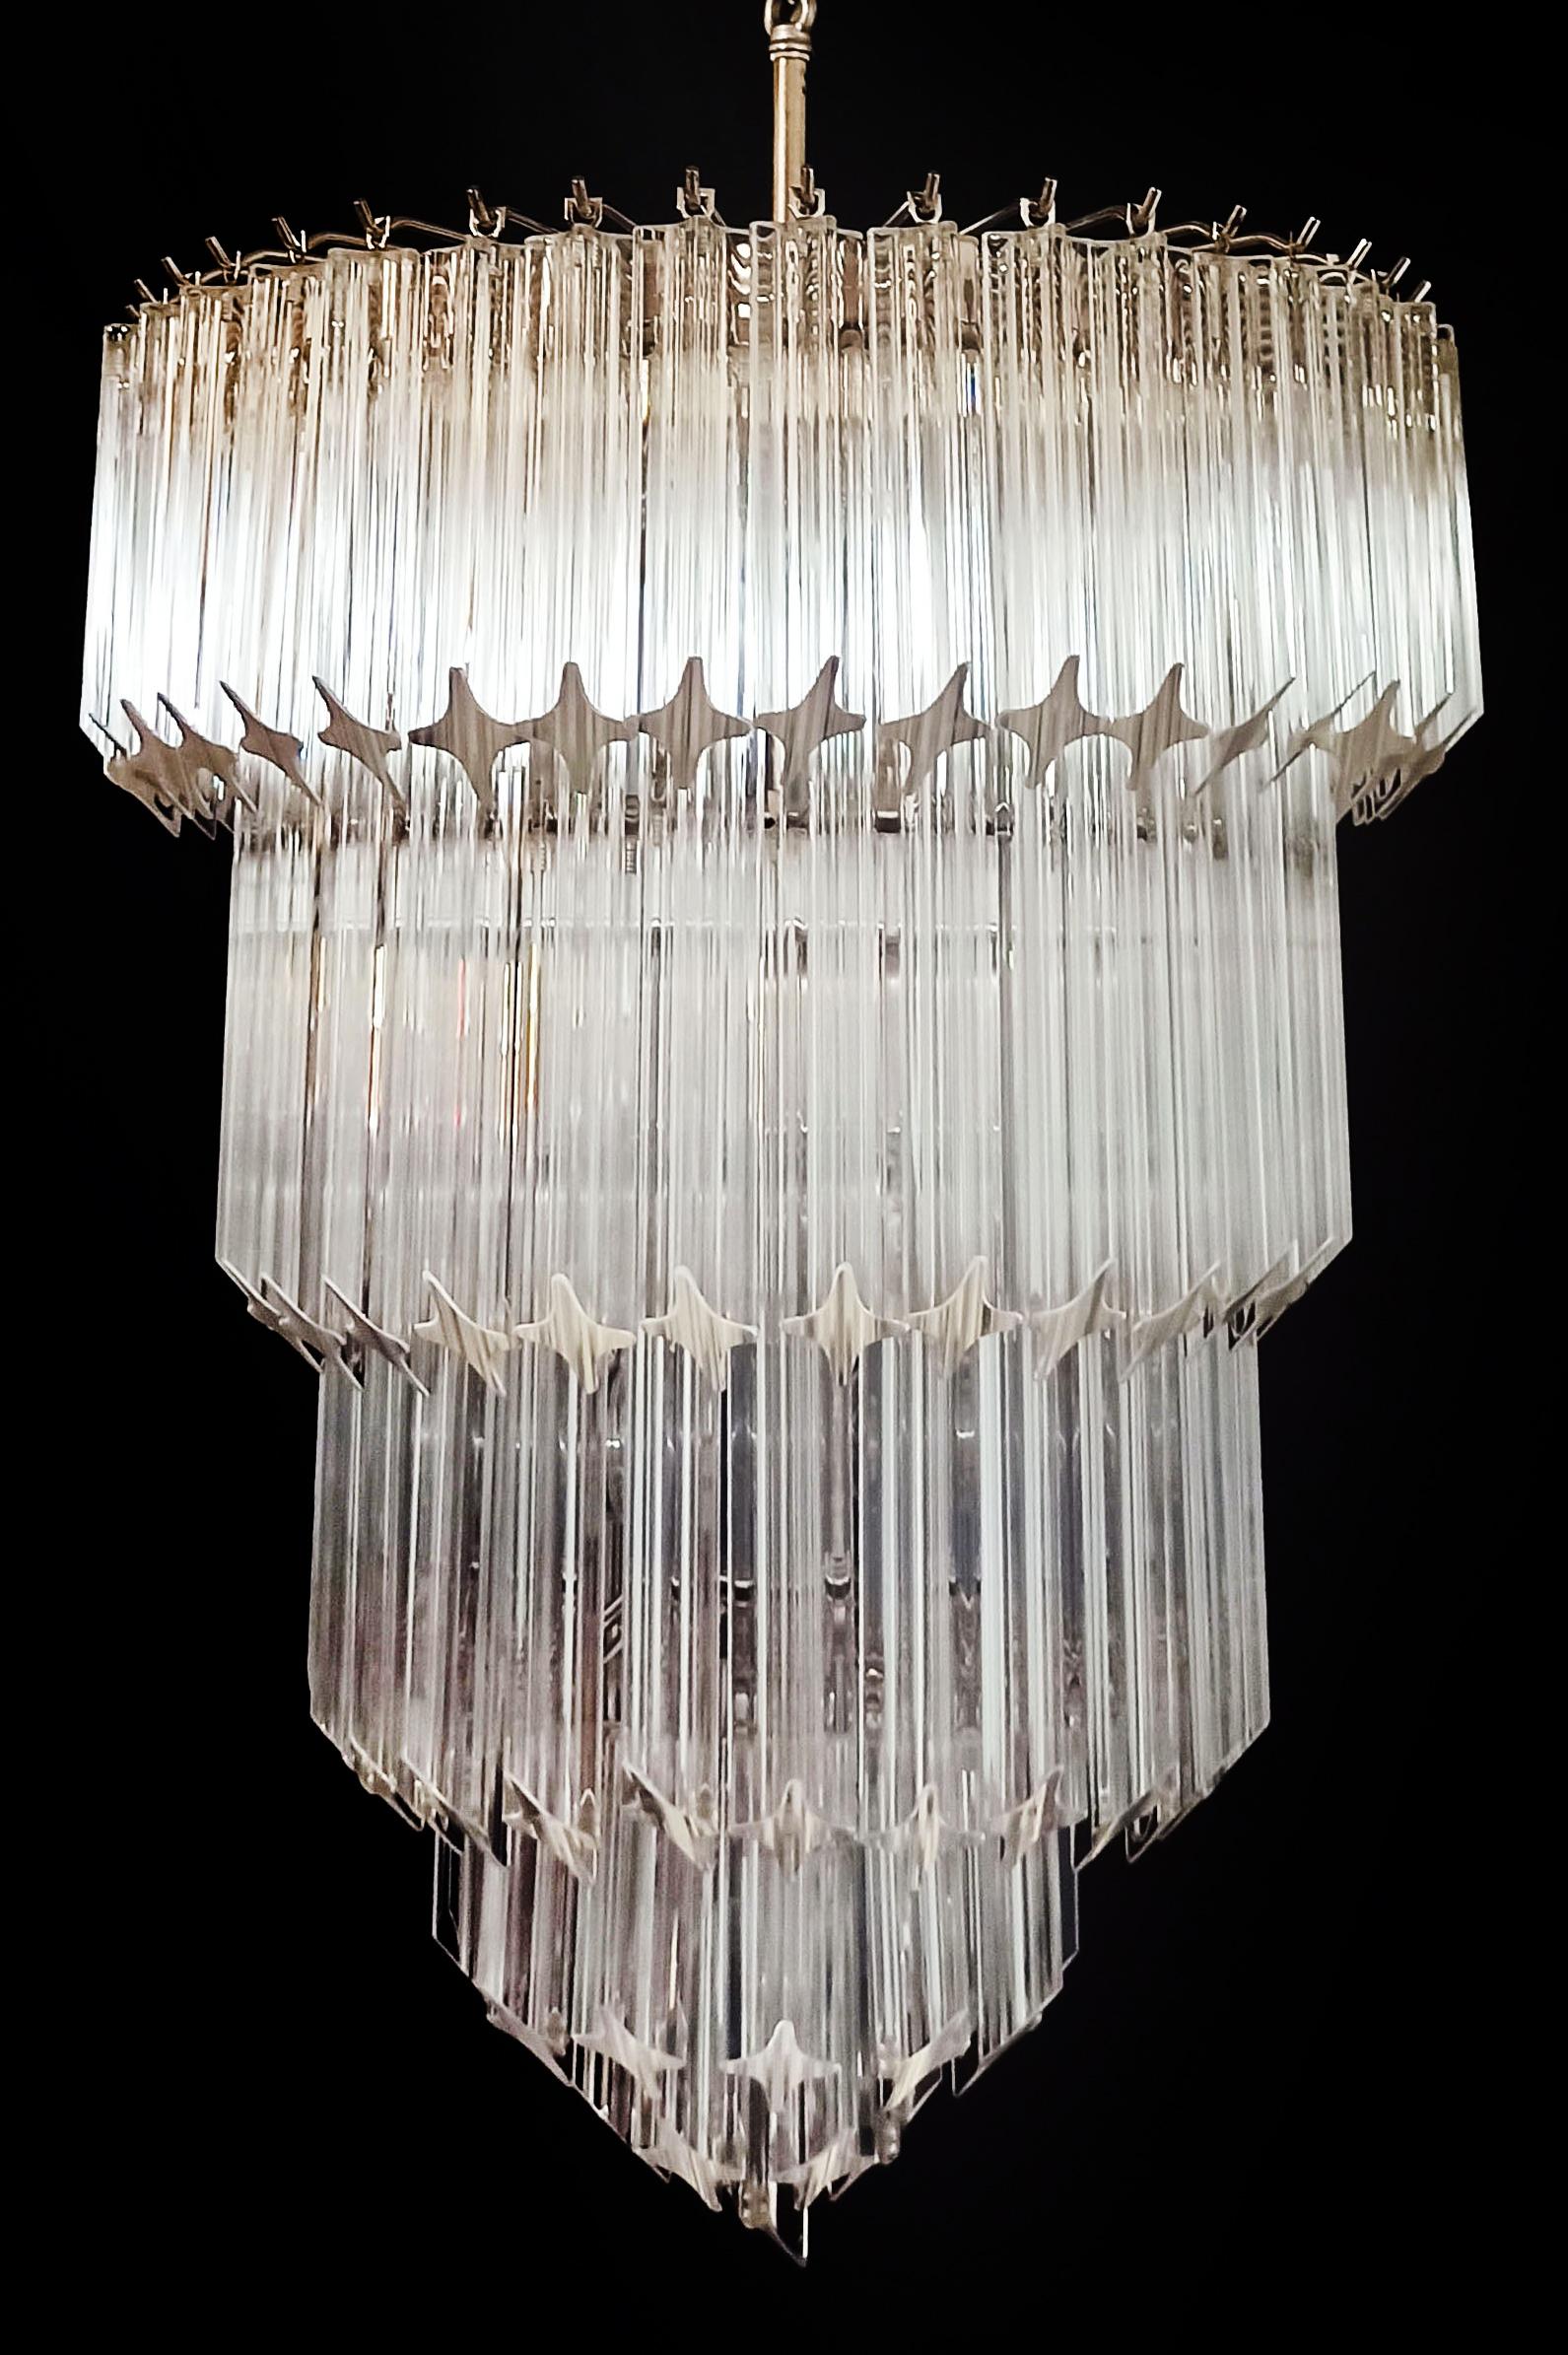 Italian Elegant Stylish Murano glass chandeliers - 112 transparent quadriedri For Sale